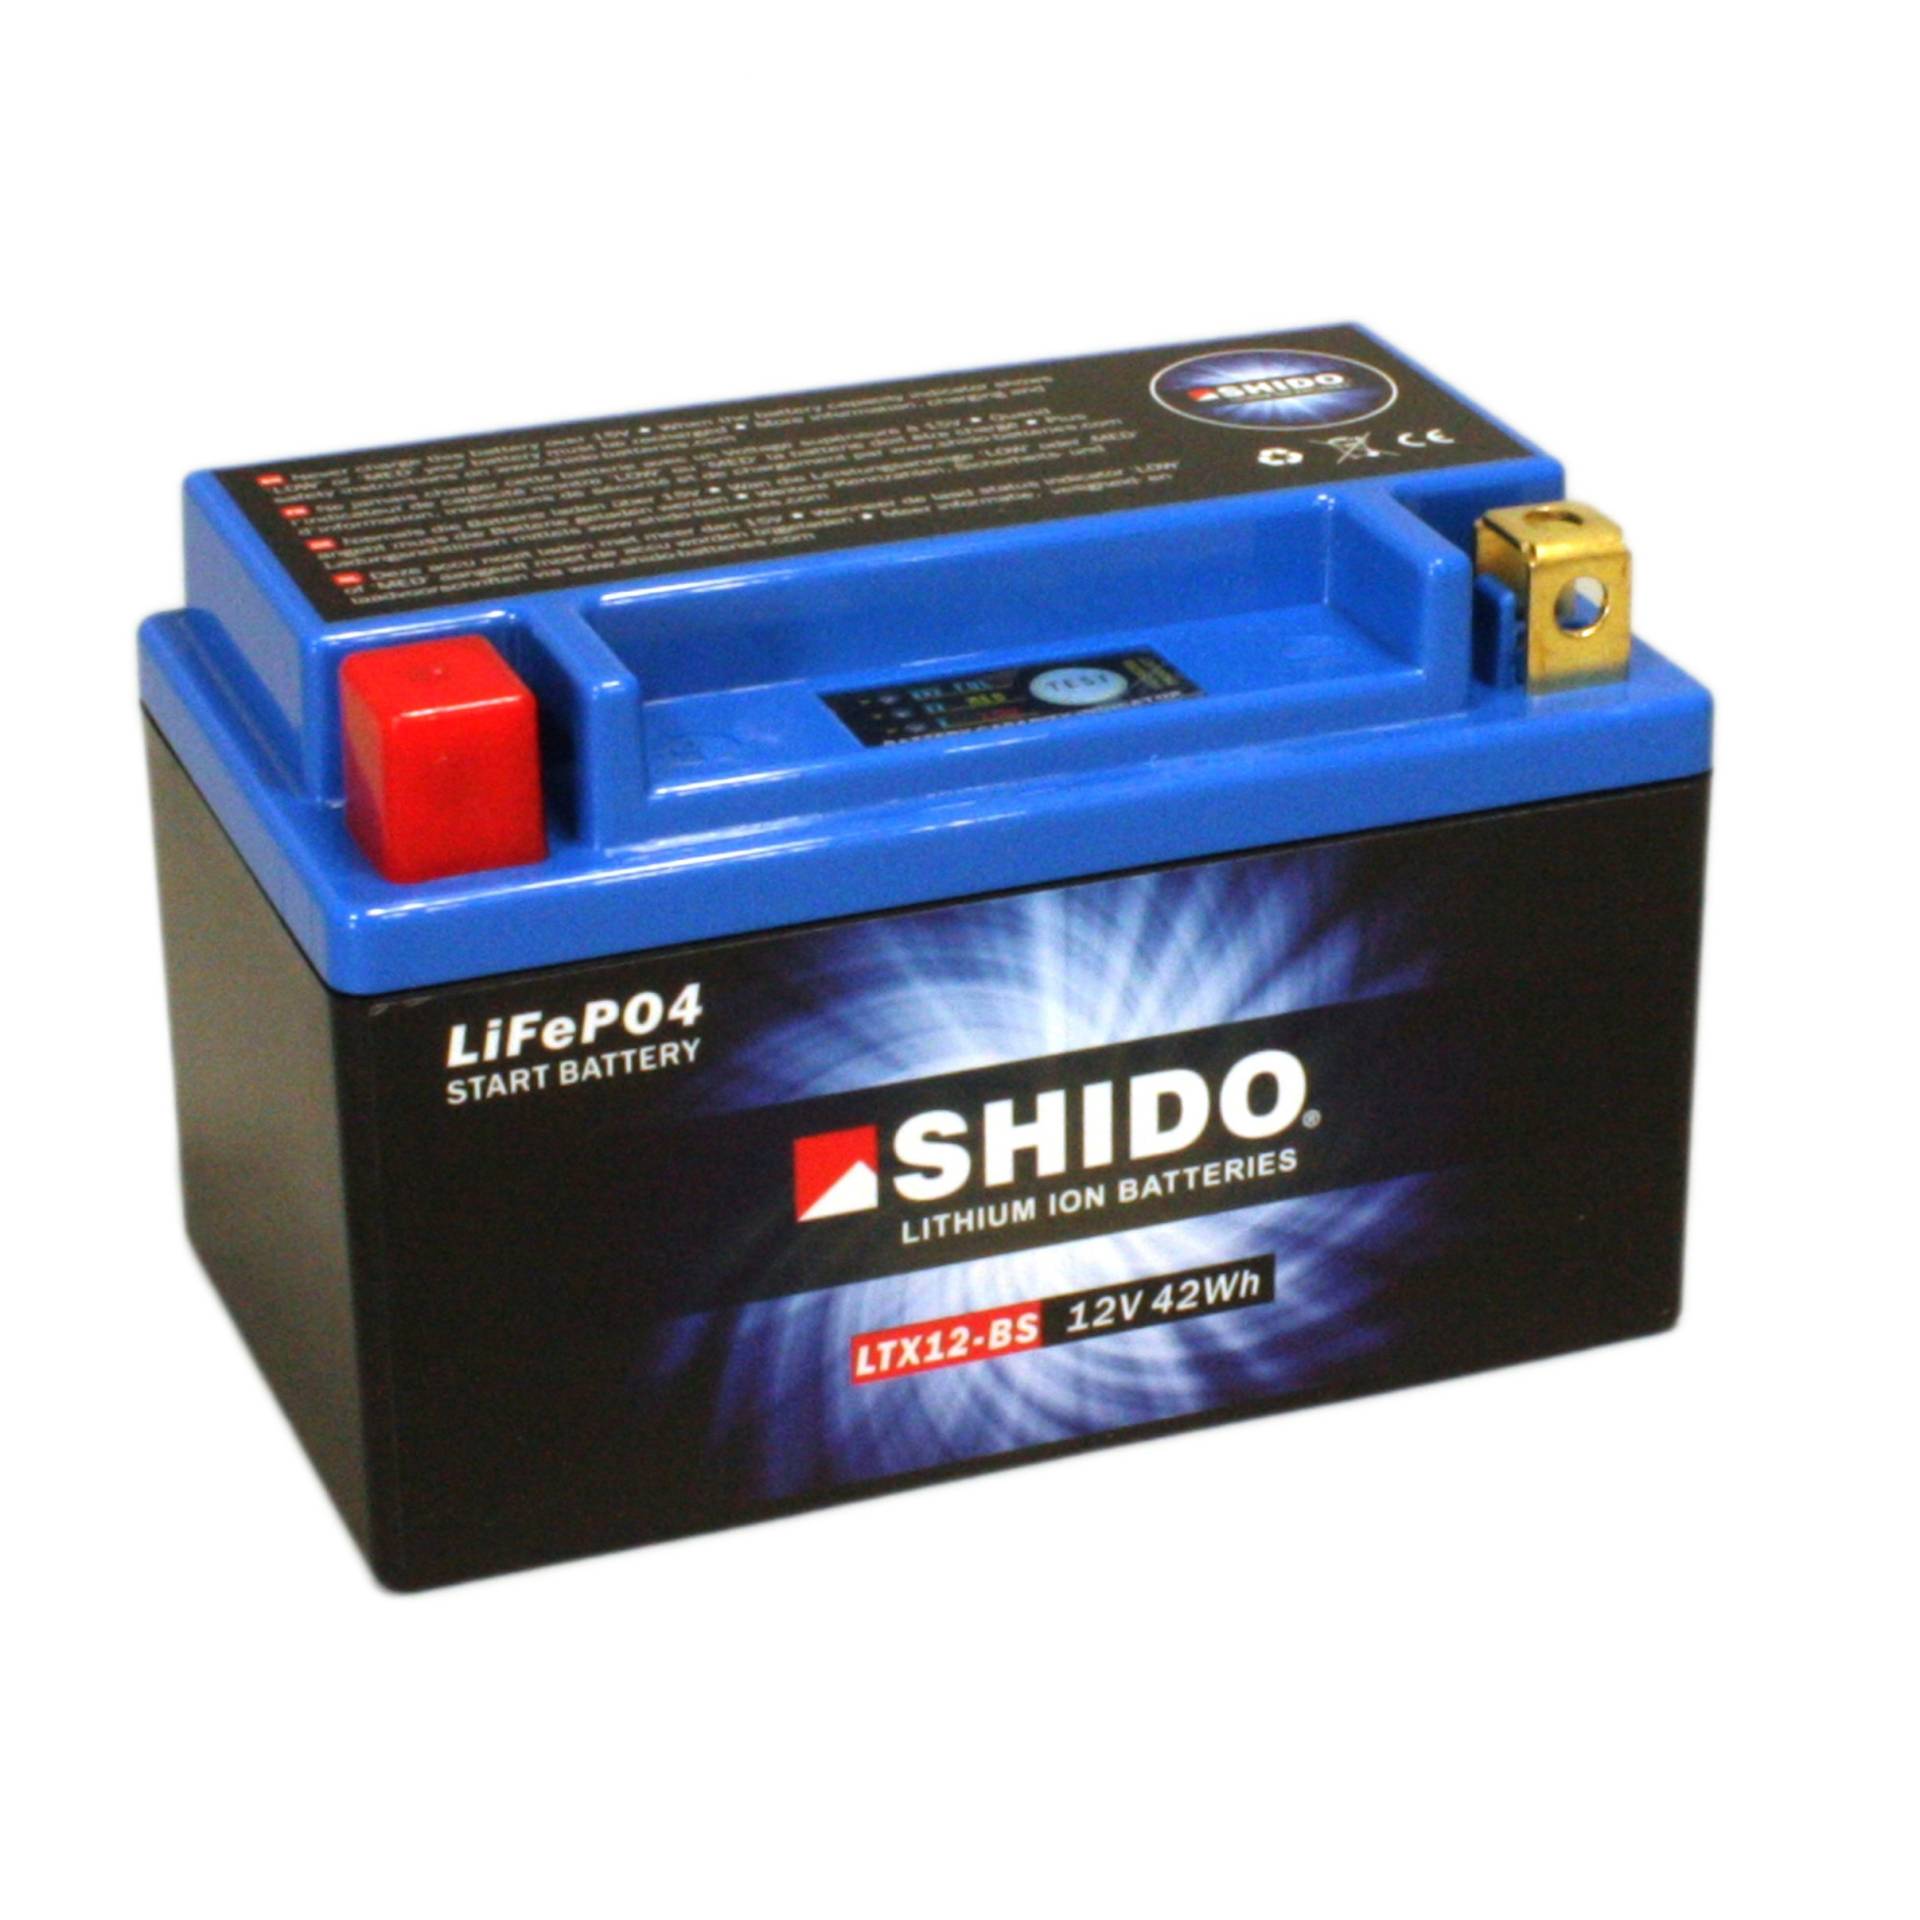 Batterie Shido Lithium LTX12-BS / YTX12-BS, 12V/10AH (Maße: 150x87x130) für Peugeot Satelis 400 Urban (ABS) Baujahr 2011 von Shido